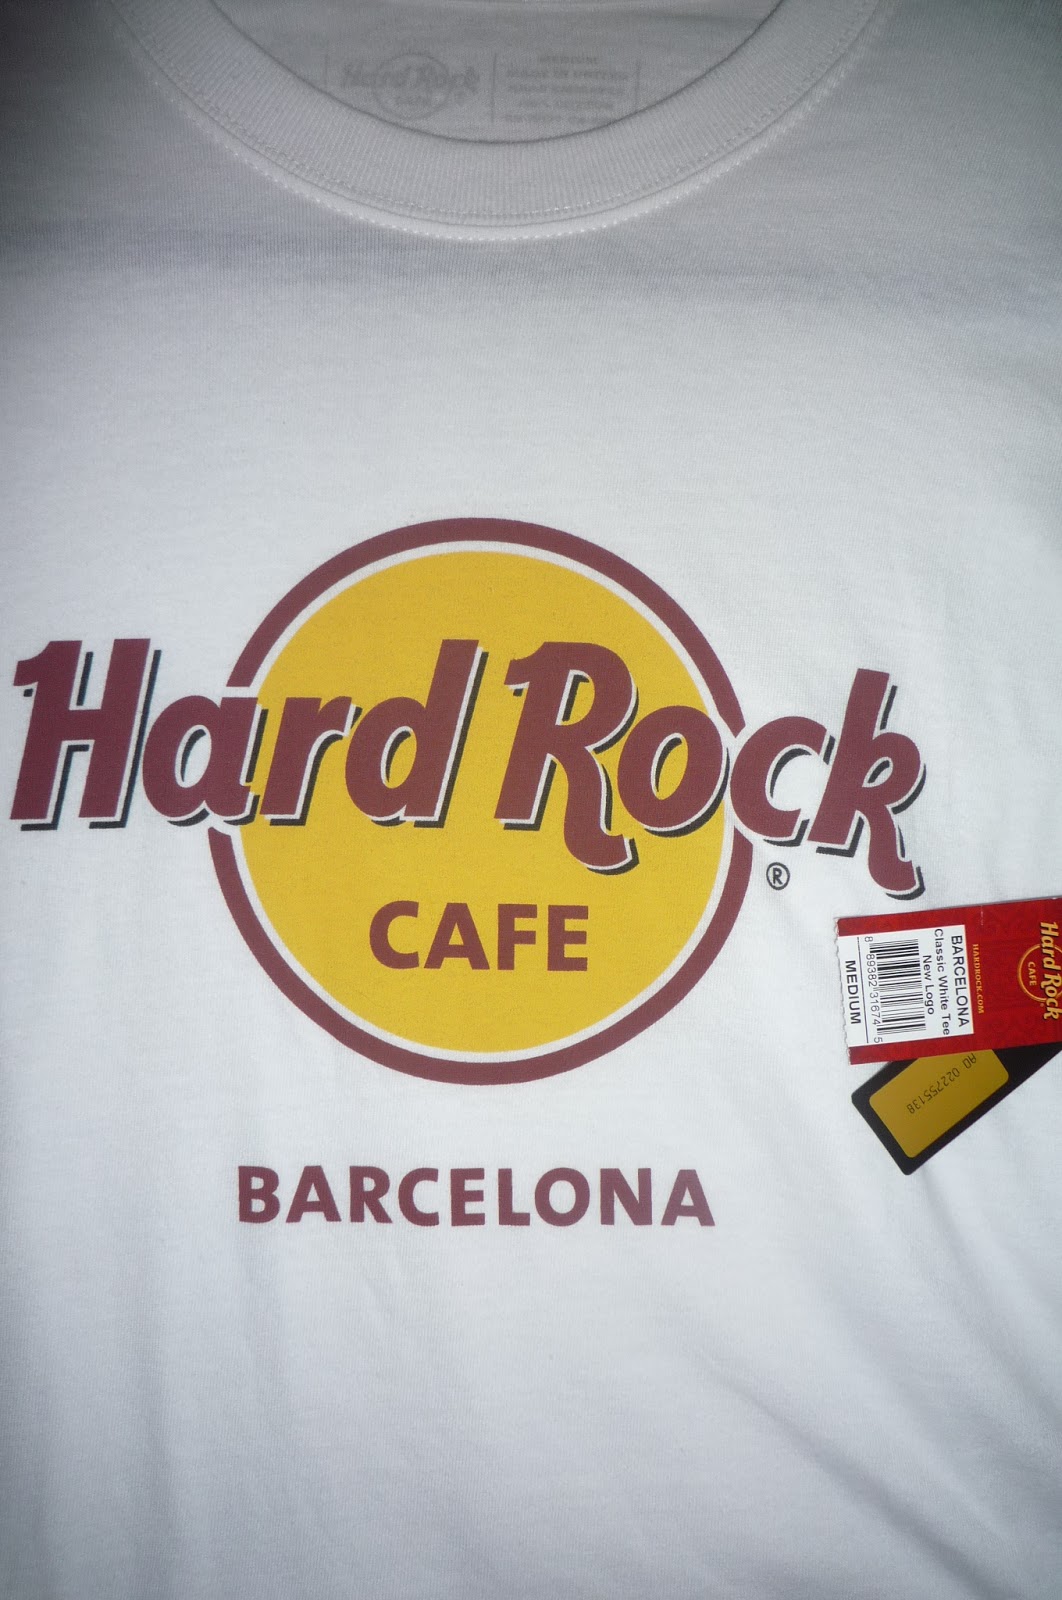 Hard rock cafe barcelona t shirt preis